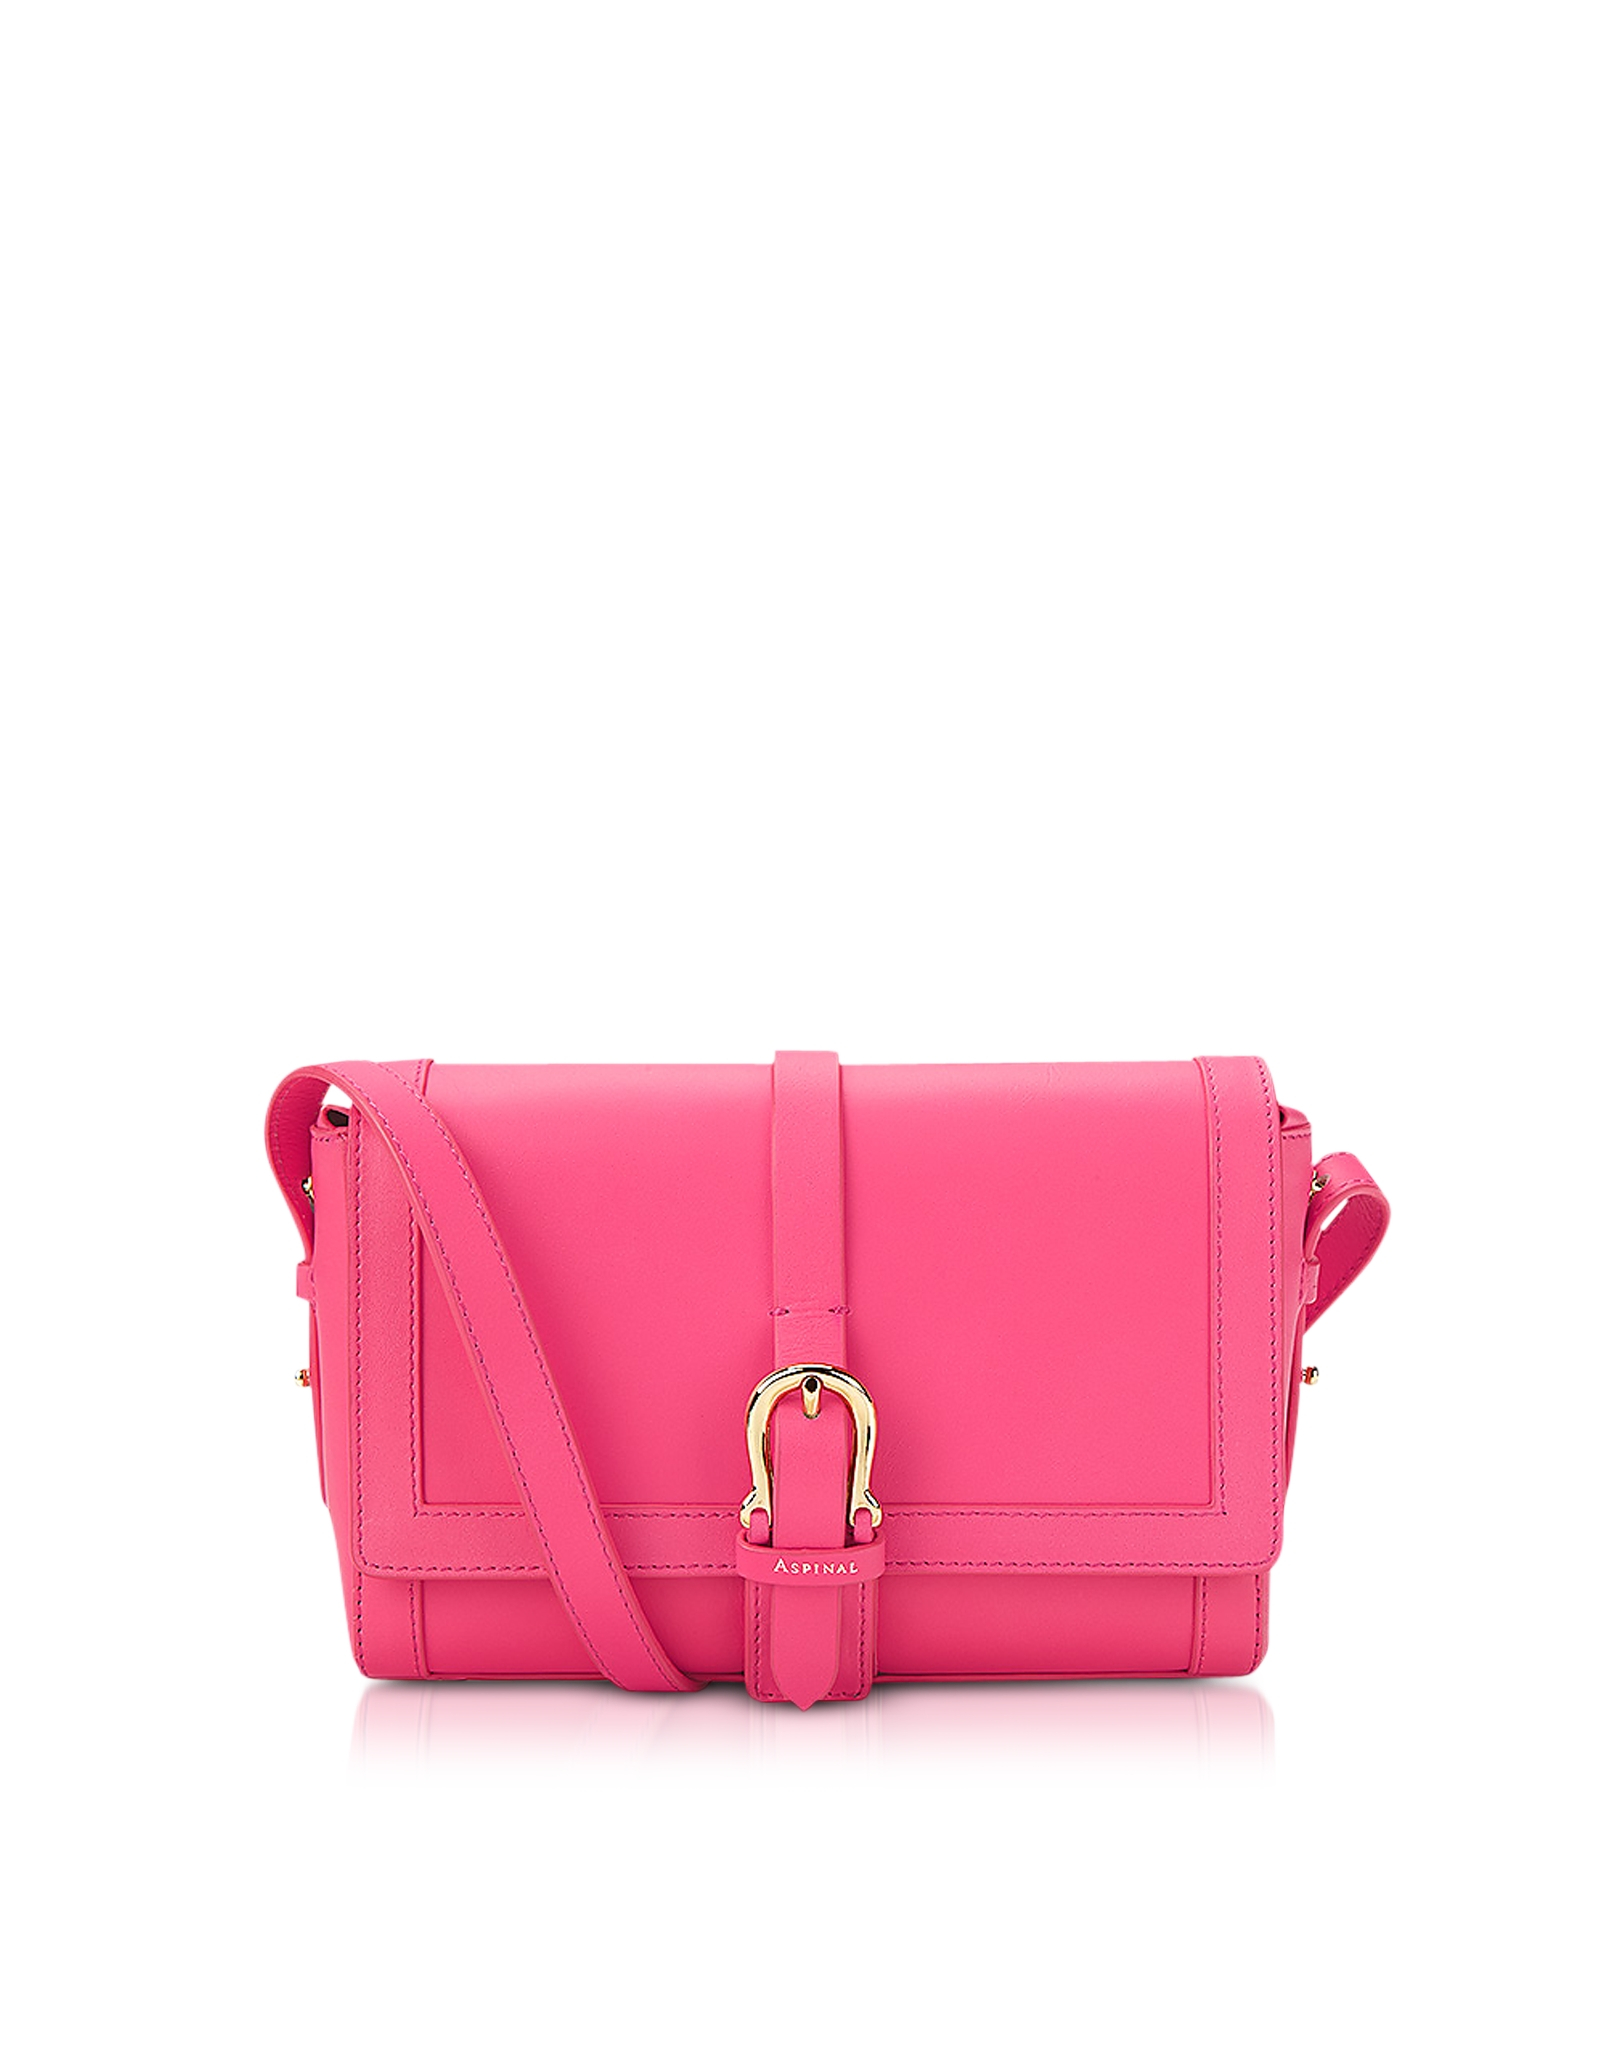 Lyst - Aspinal Neon Pink Mini Shoulder Buckle Bag in Pink